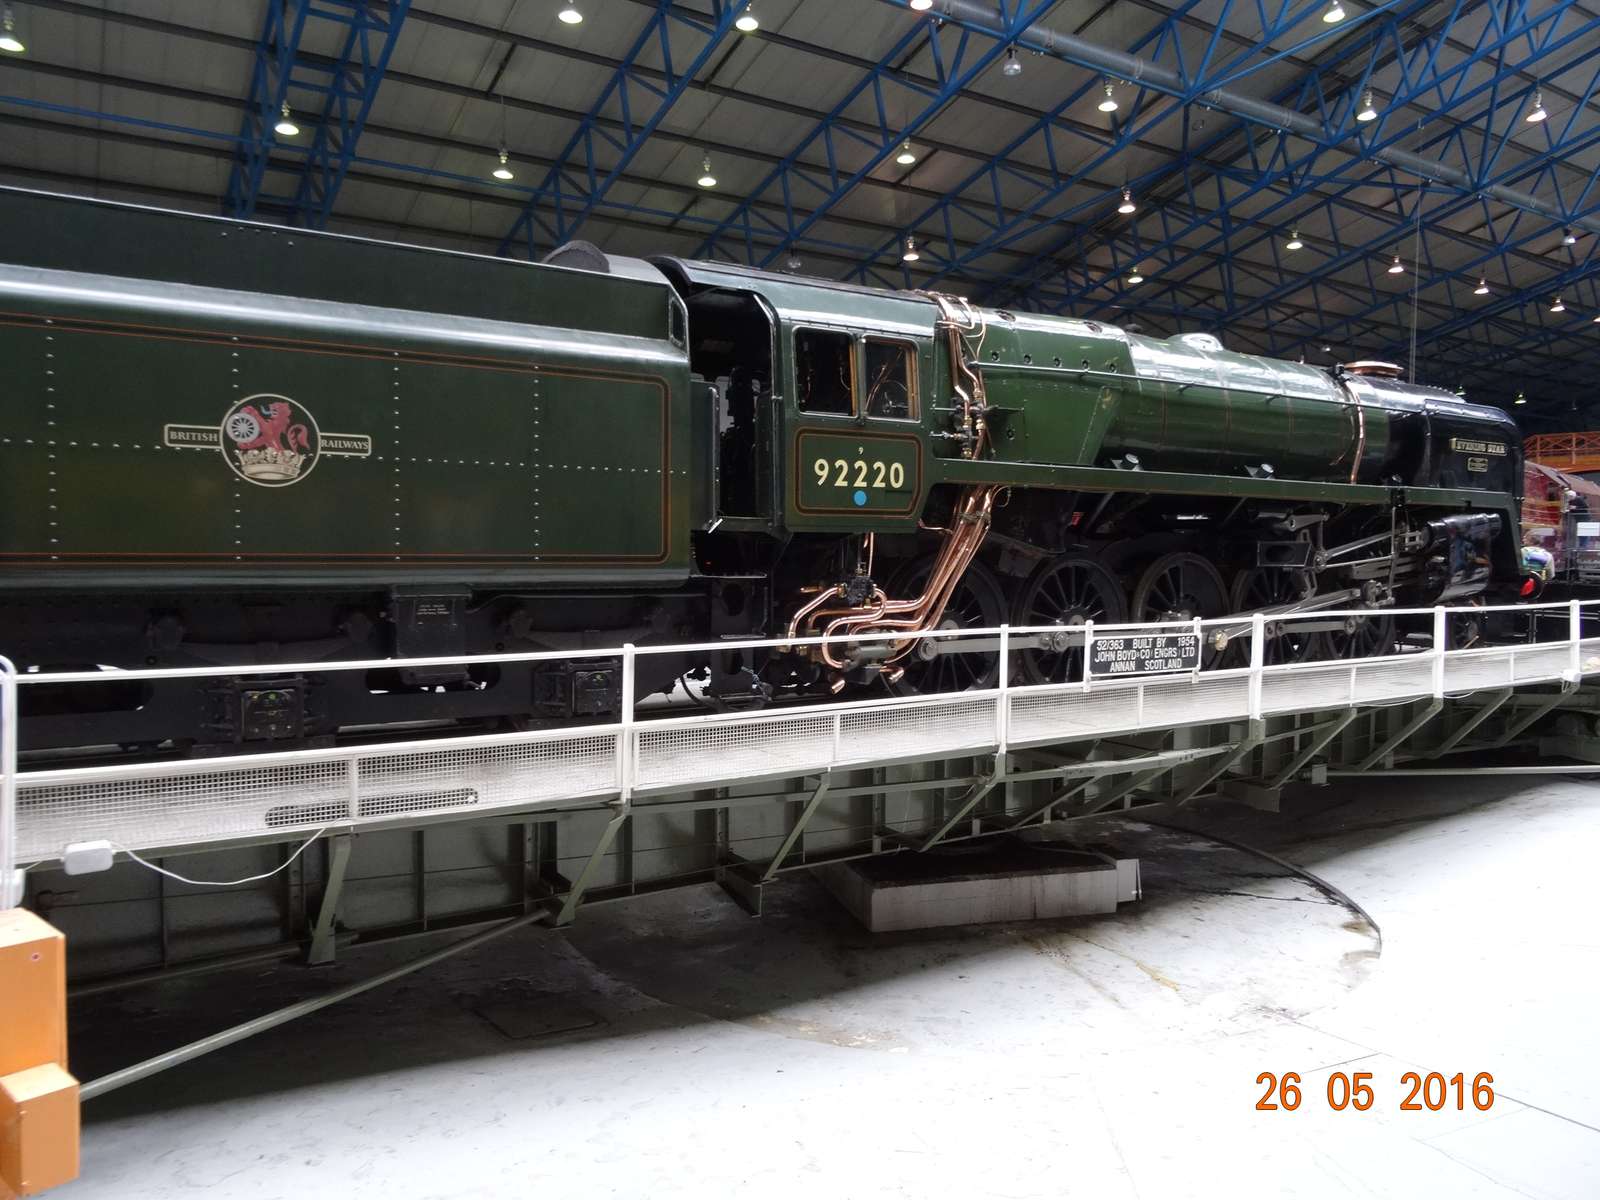 1954 York England steam locomotive puzzle online from photo